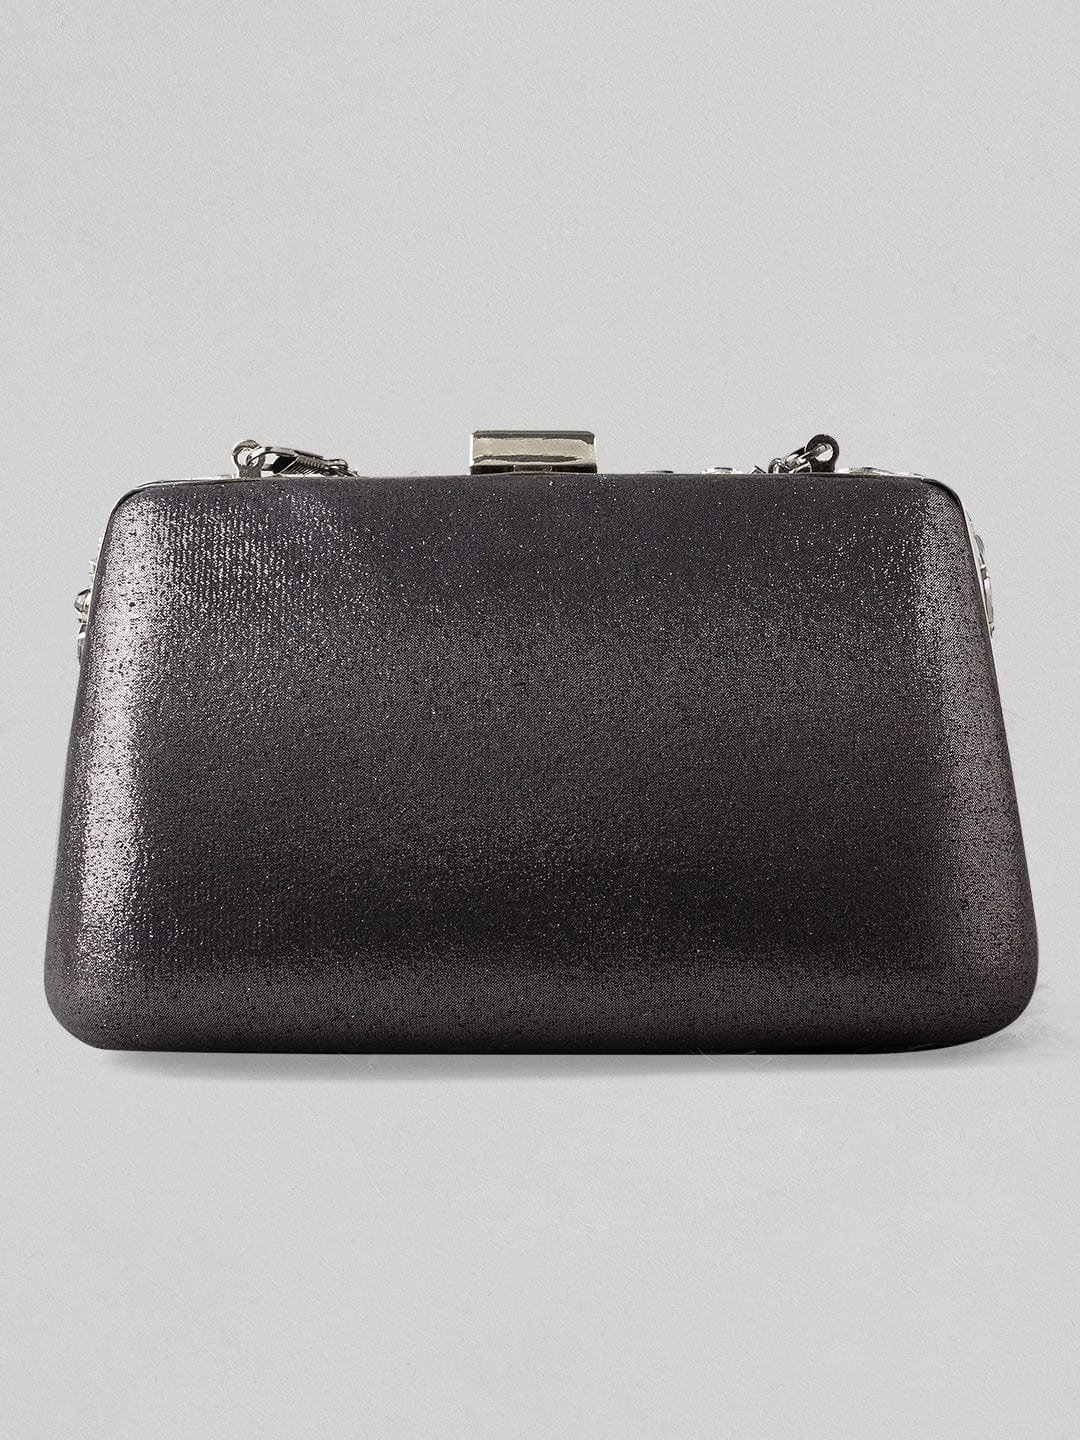 Designer Crystal Women Clutch Handbags | Gold handbags, Clutch handbag,  Clutch